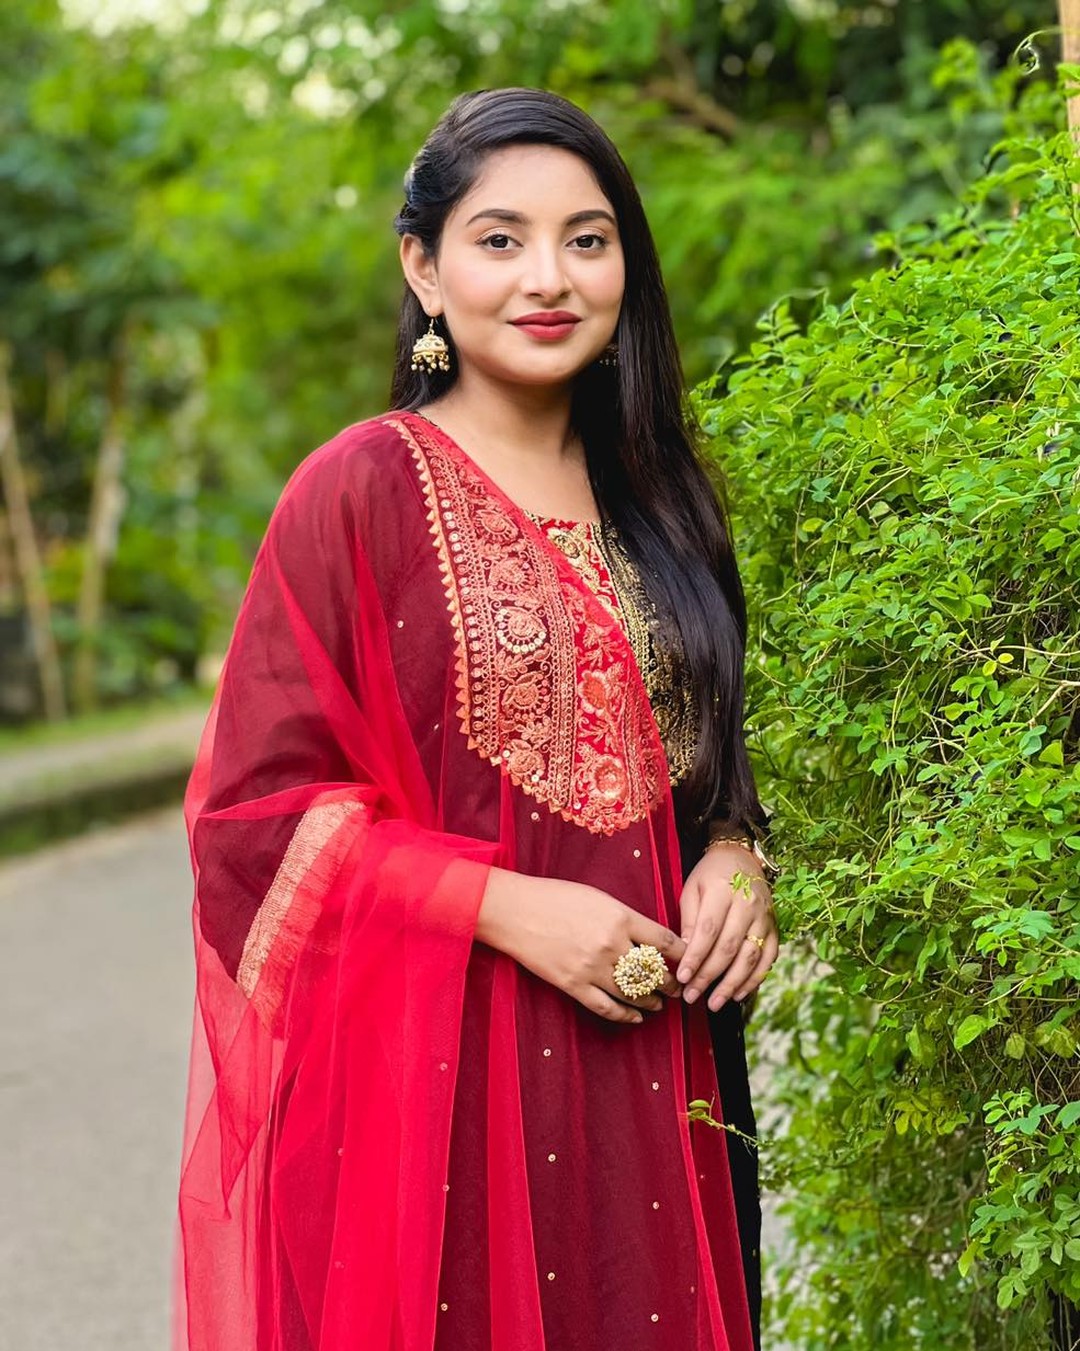 Indian Girl Photo